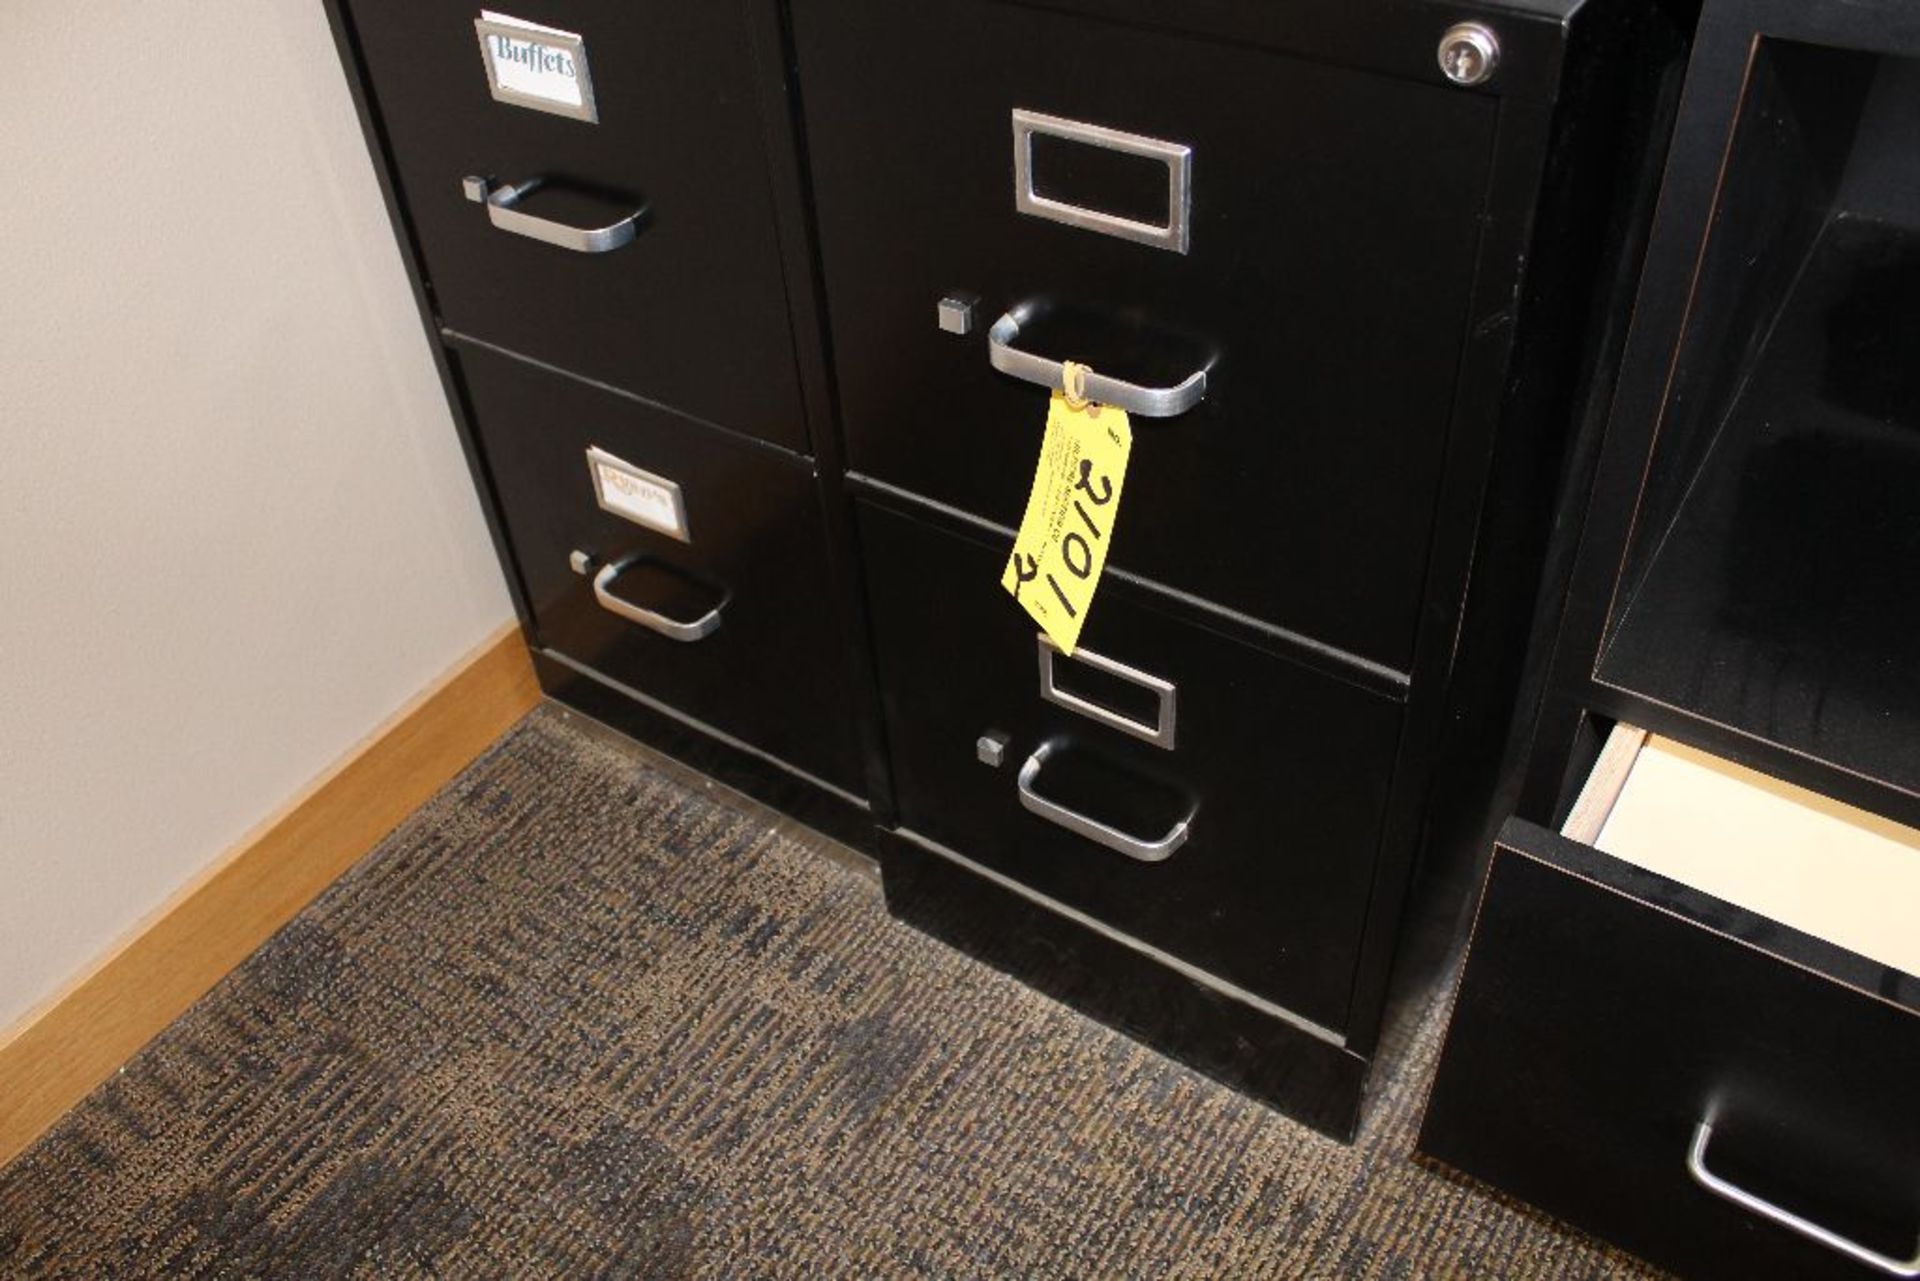 Hon 2 drawer file cabinets.